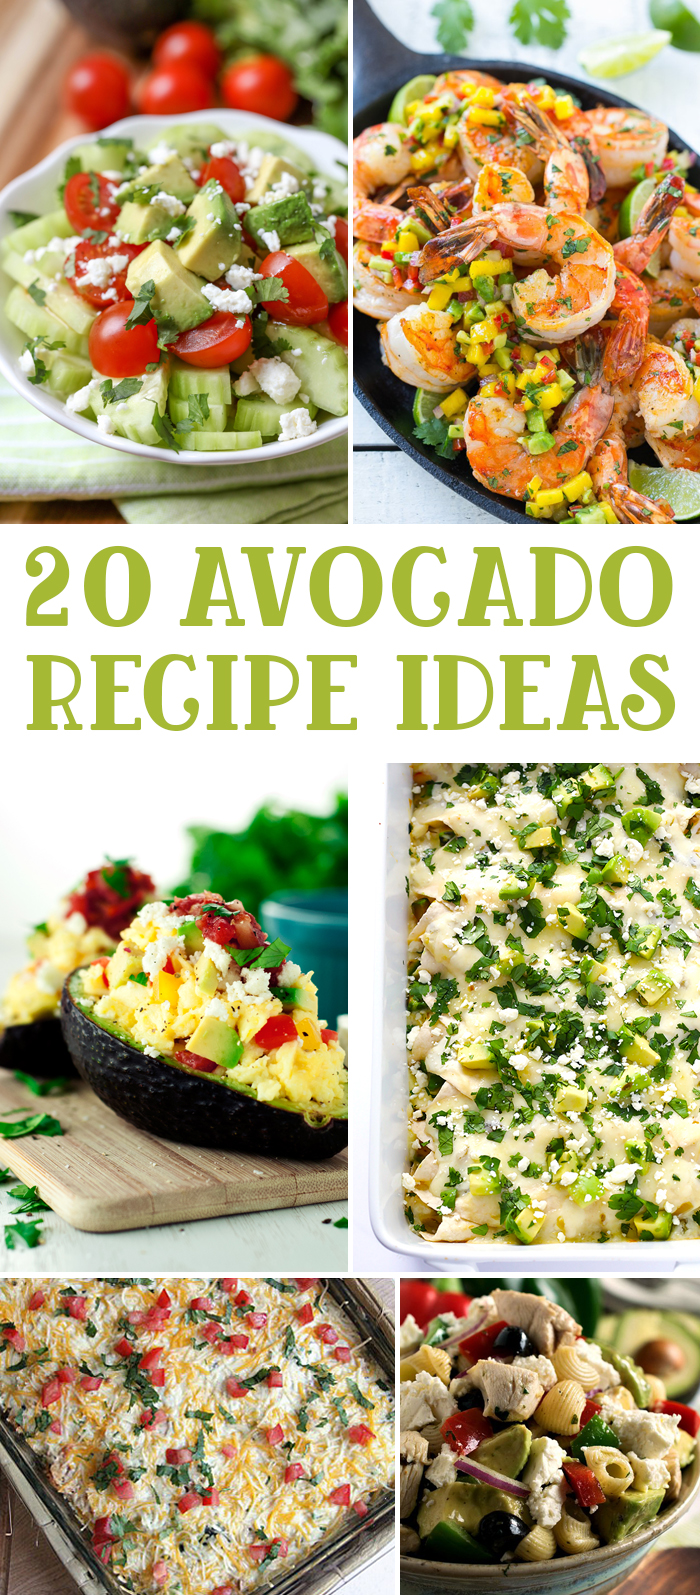 avocado recipe ideas